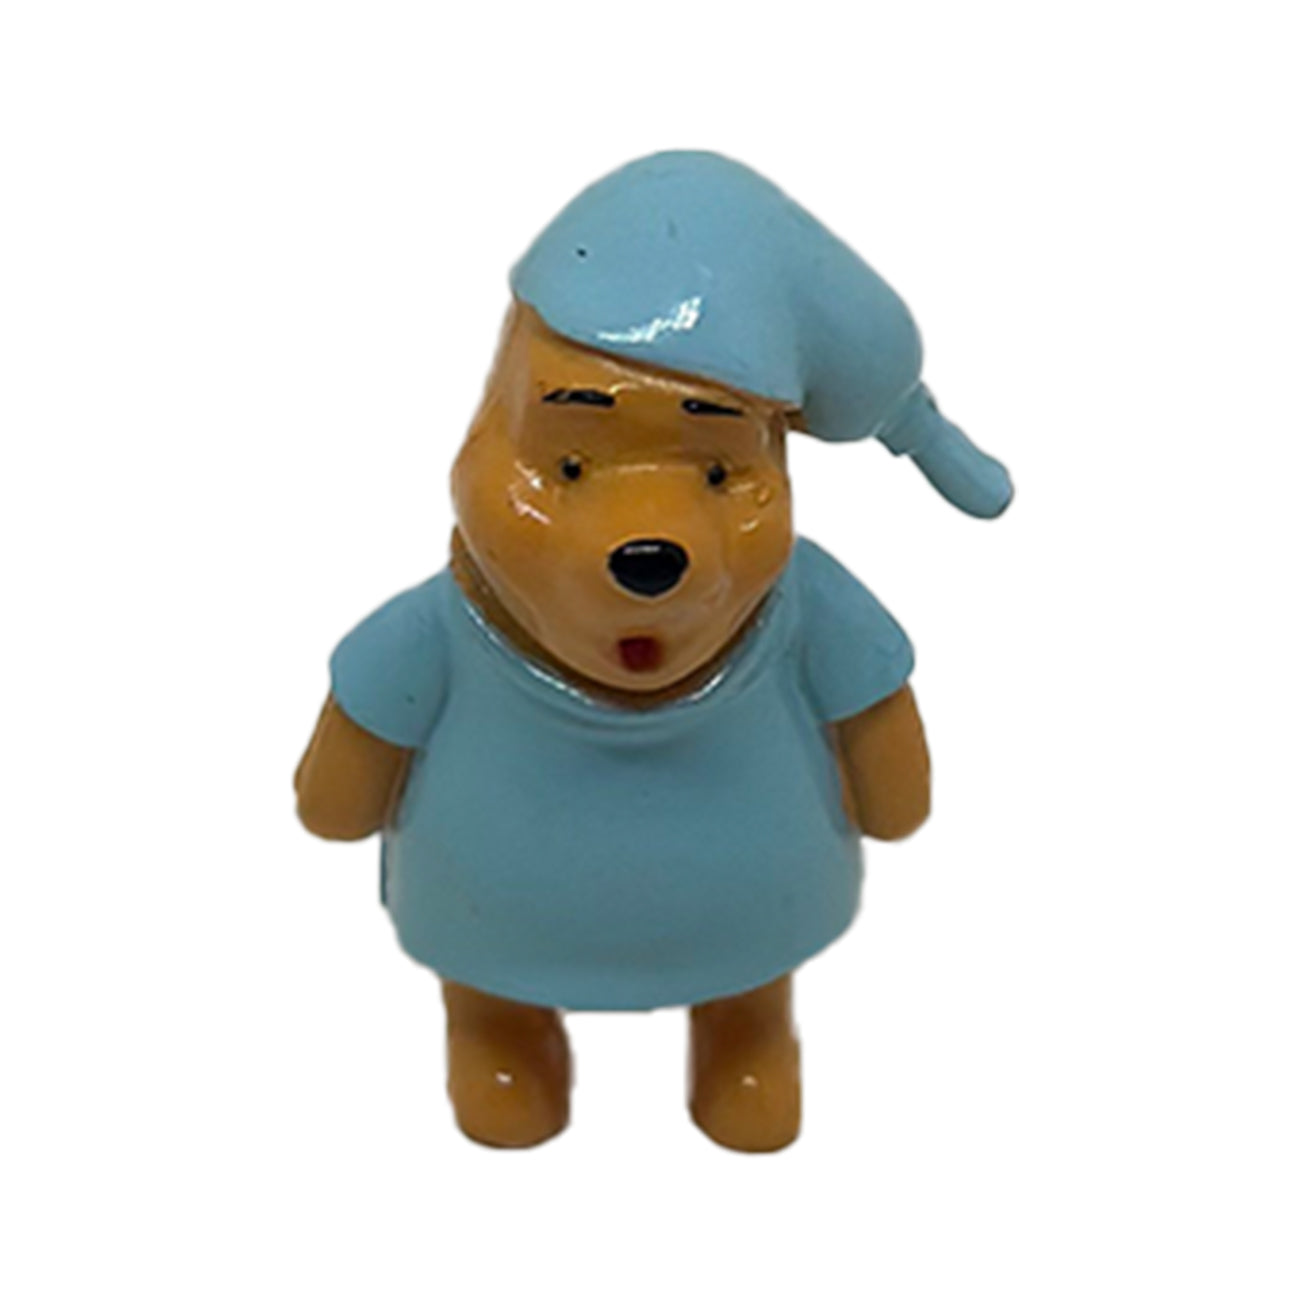 Disney - Winnie the Pooh Pooh in Pajamas 1990 - Figure 3cm